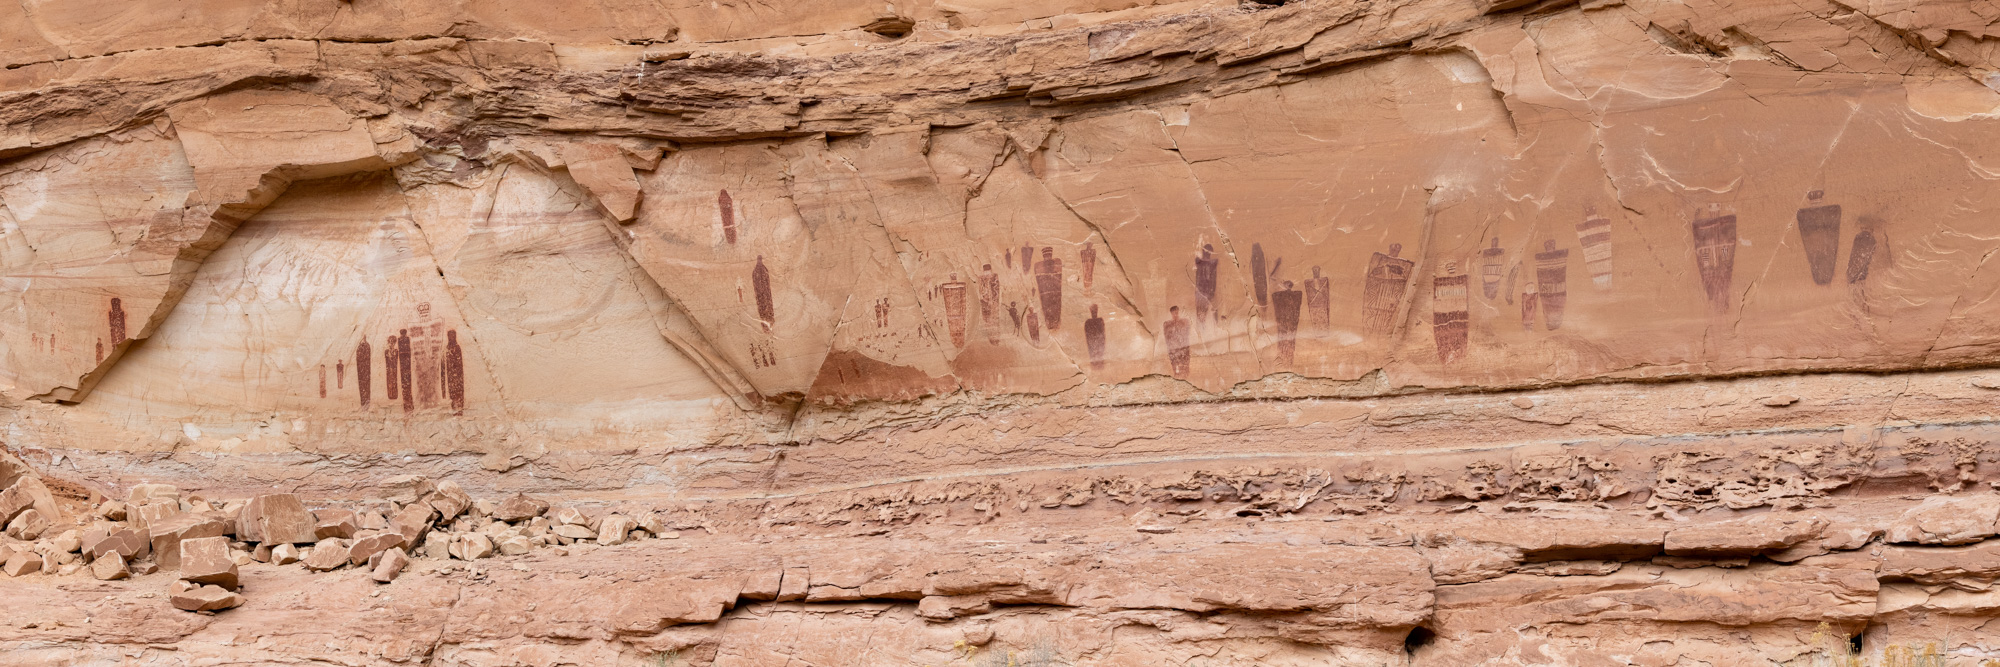 horseshoe canyon, utah, pictographs, petroglyphs, native american, barrier style art, rock art, native american art